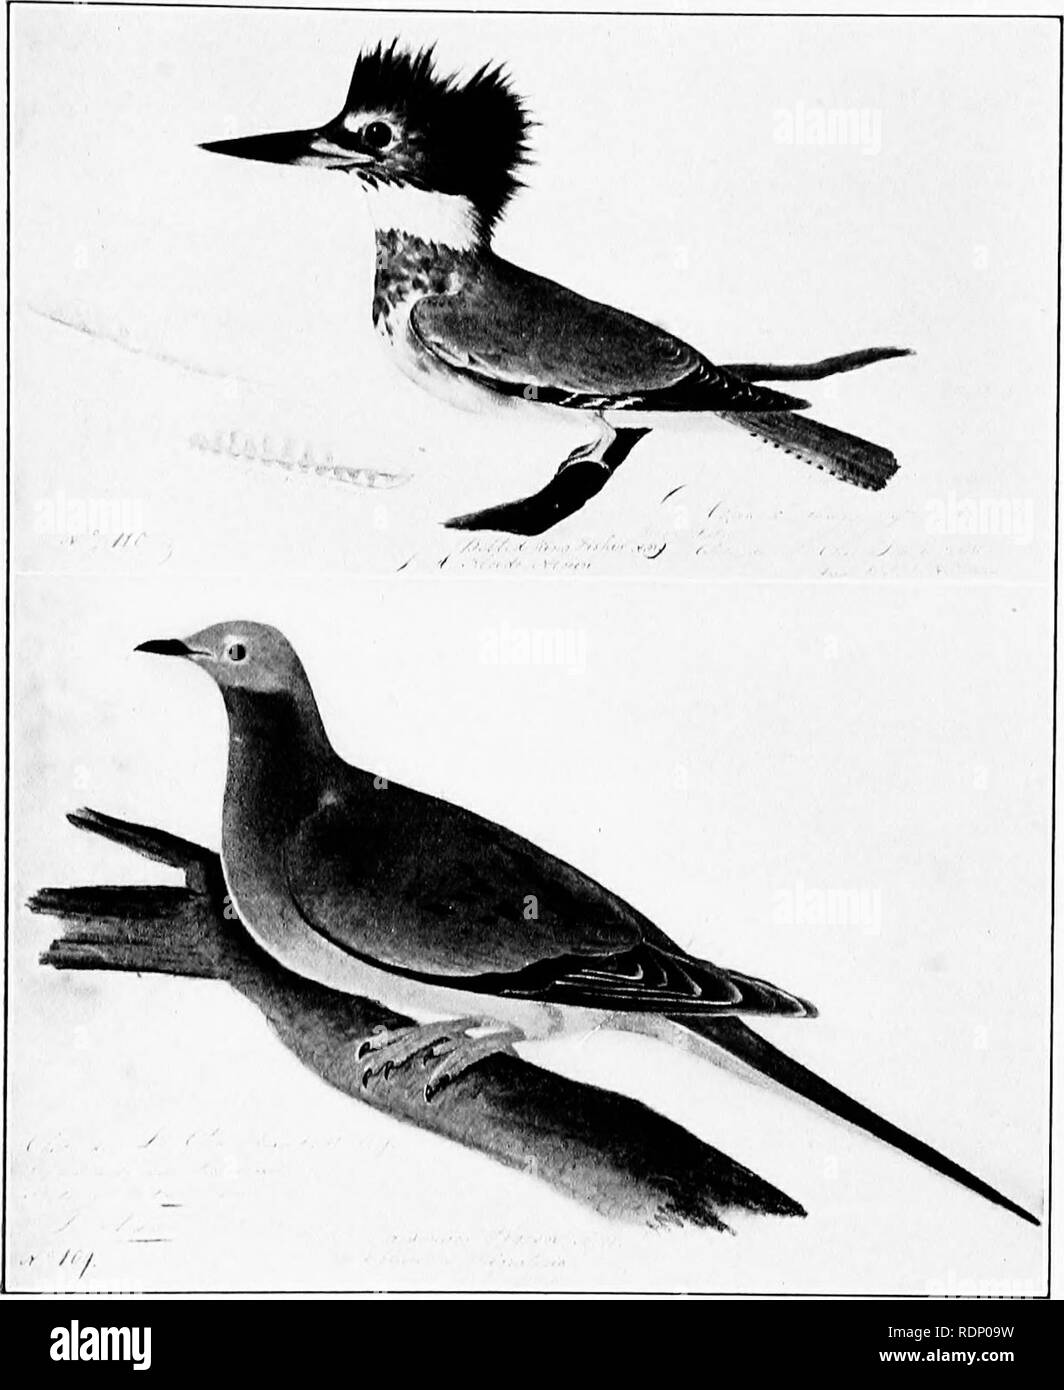 . Audubon the naturalist; a history of his life and time. Audubon, John James, 1785-1851; Ornithologists. KAKr.v r N i'rMi.isiii:i) diiawixcs or A:Mi:itiCAN jiiiidh: Aititvi;, &quot;[.'aloion d'a.'mkk- Kjri: si;i-i'i;n'iui(&gt;n AM'; iti'rioN. KiN(i fisukii. ciiutI': dm i.'iiiiio jih.v 15, IHOS. ni;i,ii:i) kim; iisiiiiit . w.-.r. a. ai.ckdo alcion. i&gt;it,'N itv J. .). ArnritoN. No. 110;&quot; niii.nw, &quot;i'Asskxckh piciion- a. w. (OIIMI M  :t Kilt A'lOlM A. ('IIT'li; l)K I.'oTTH). DKC'K Tl It. 11, IHOO. 1-? i'i:nn'i:s a i.a (JcimM'; tuks i':ta(1i;i:. Ai'i'i:!!': iri wii.n ricKox. .r Stock Photo